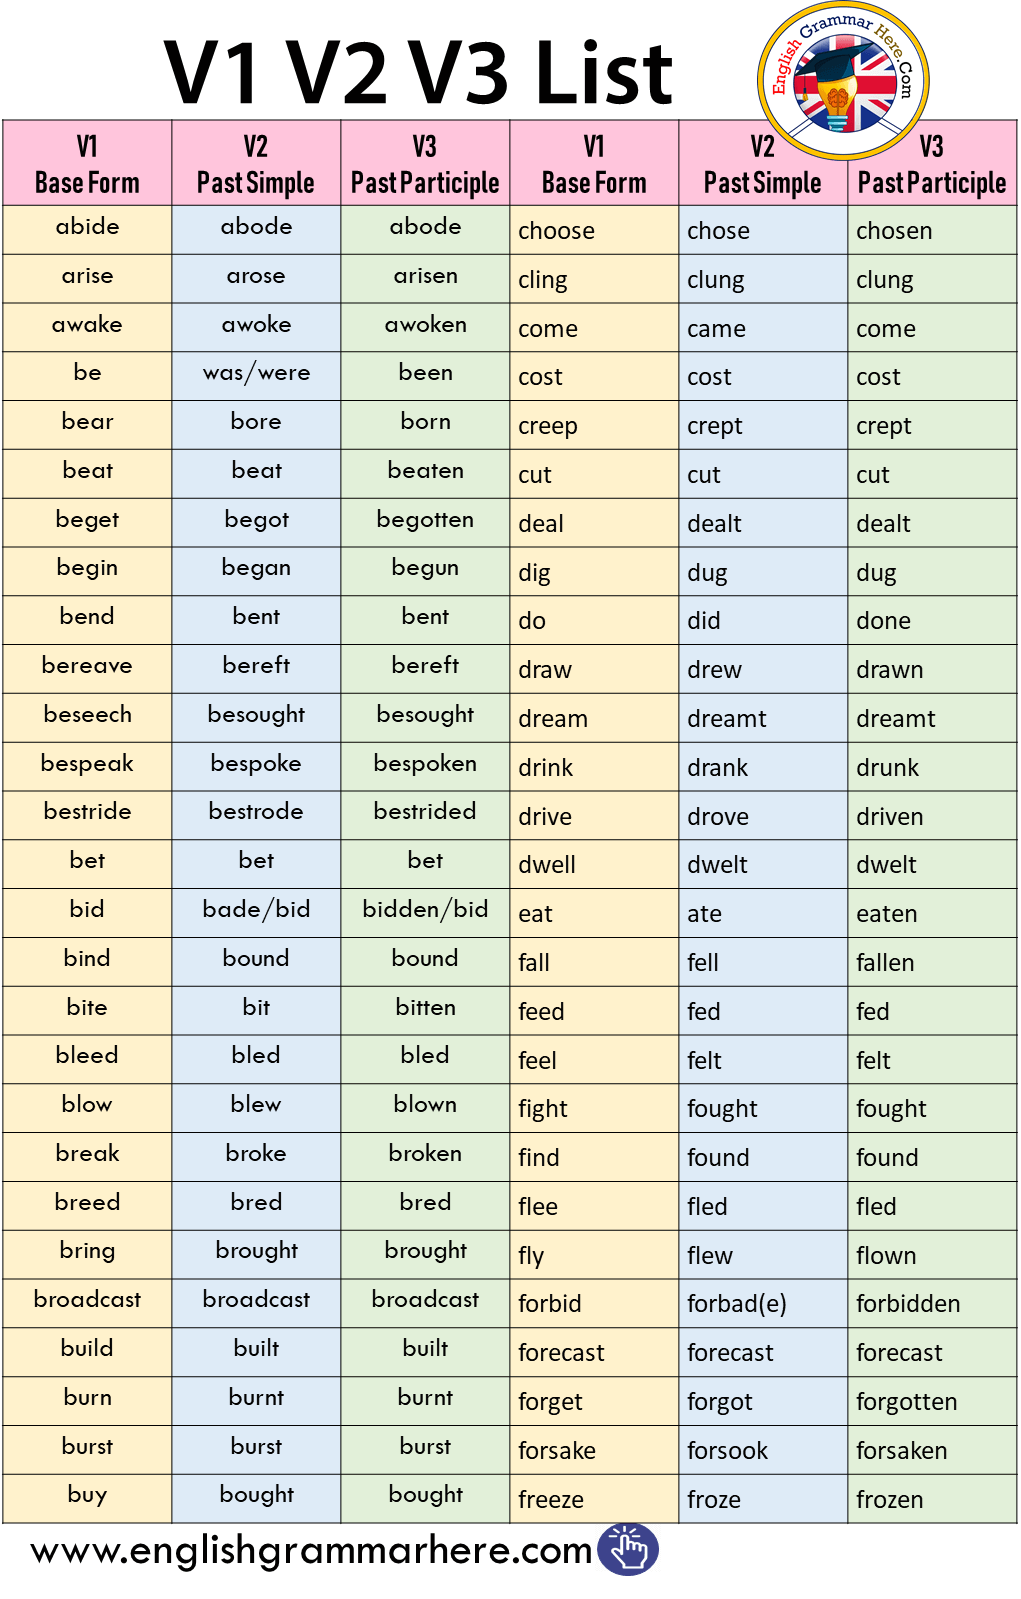 V1 V2 V3 List in English